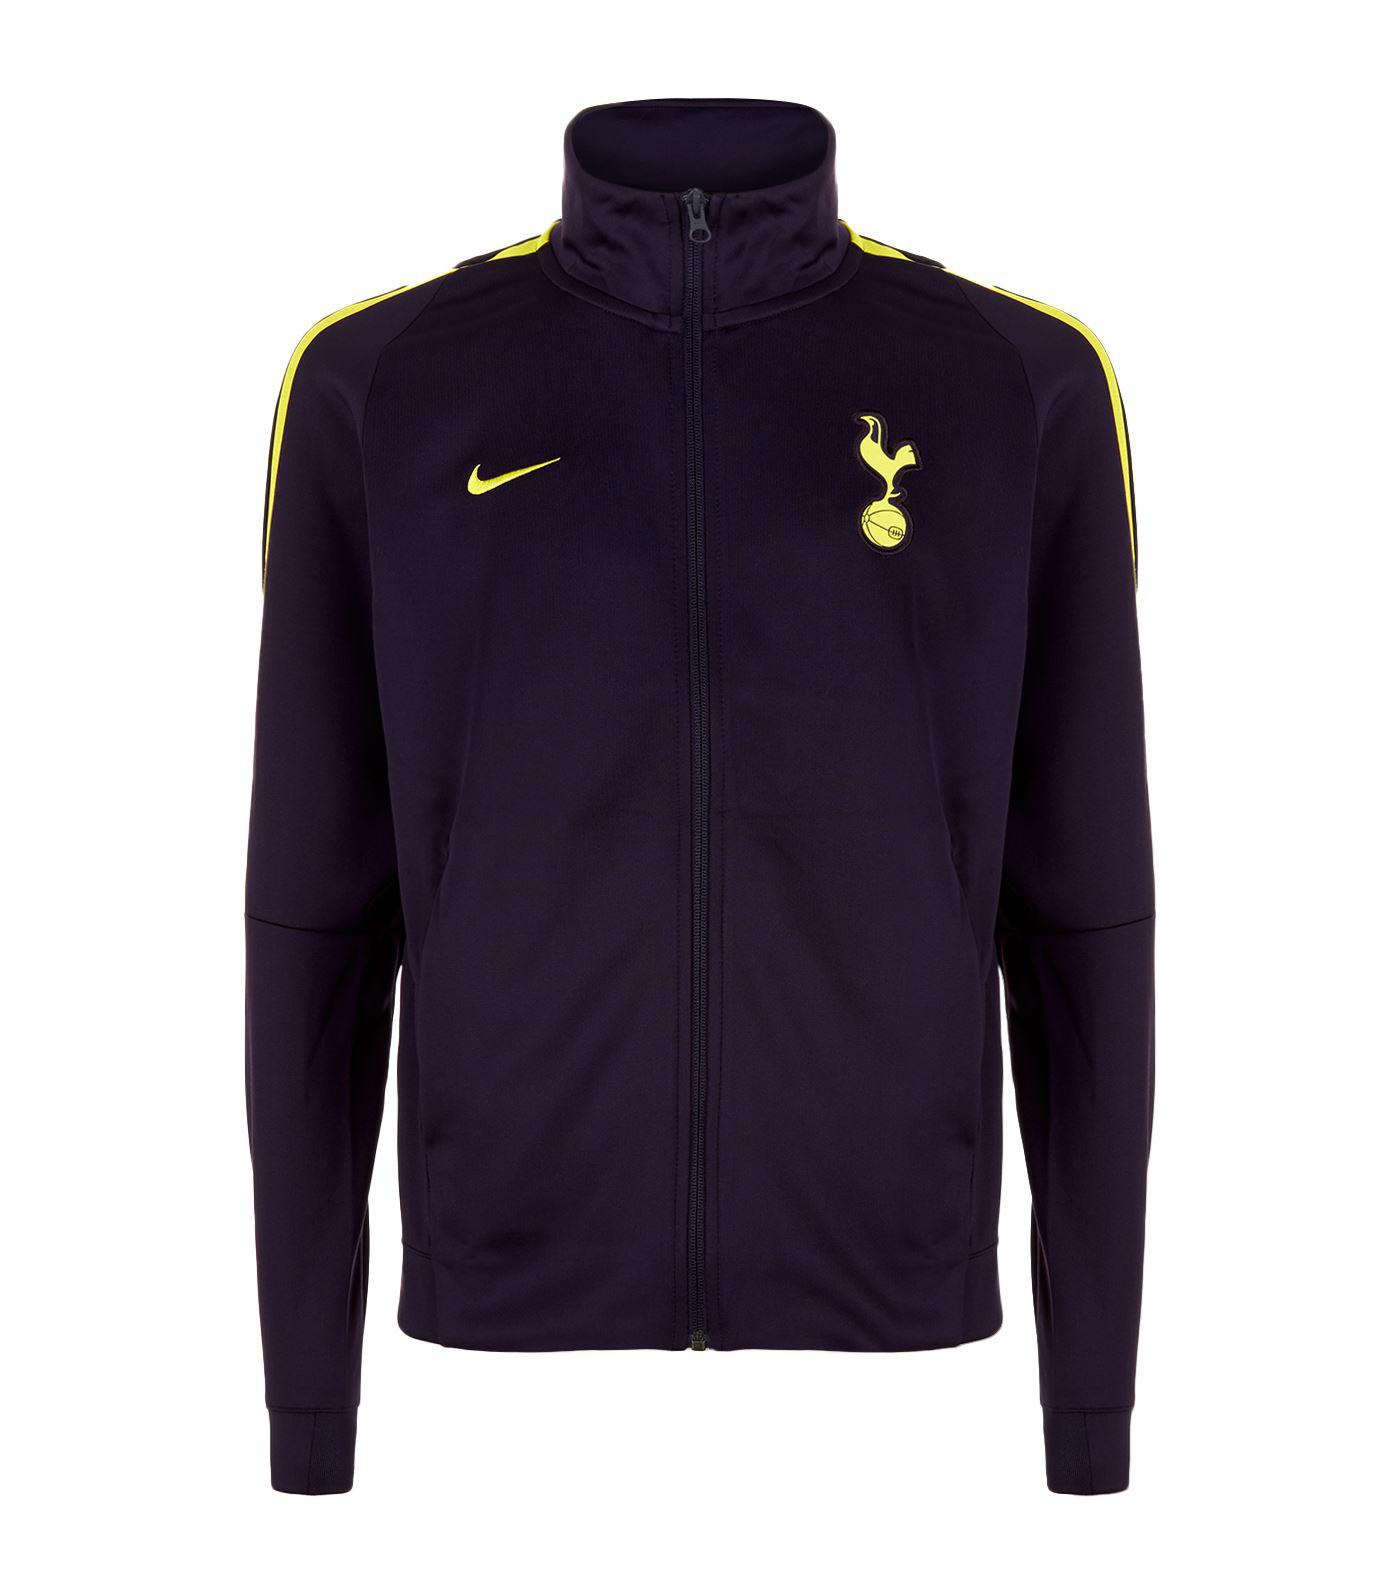 Nike Tottenham Hotspur Fc Franchise Football Jacket in Purple for Men